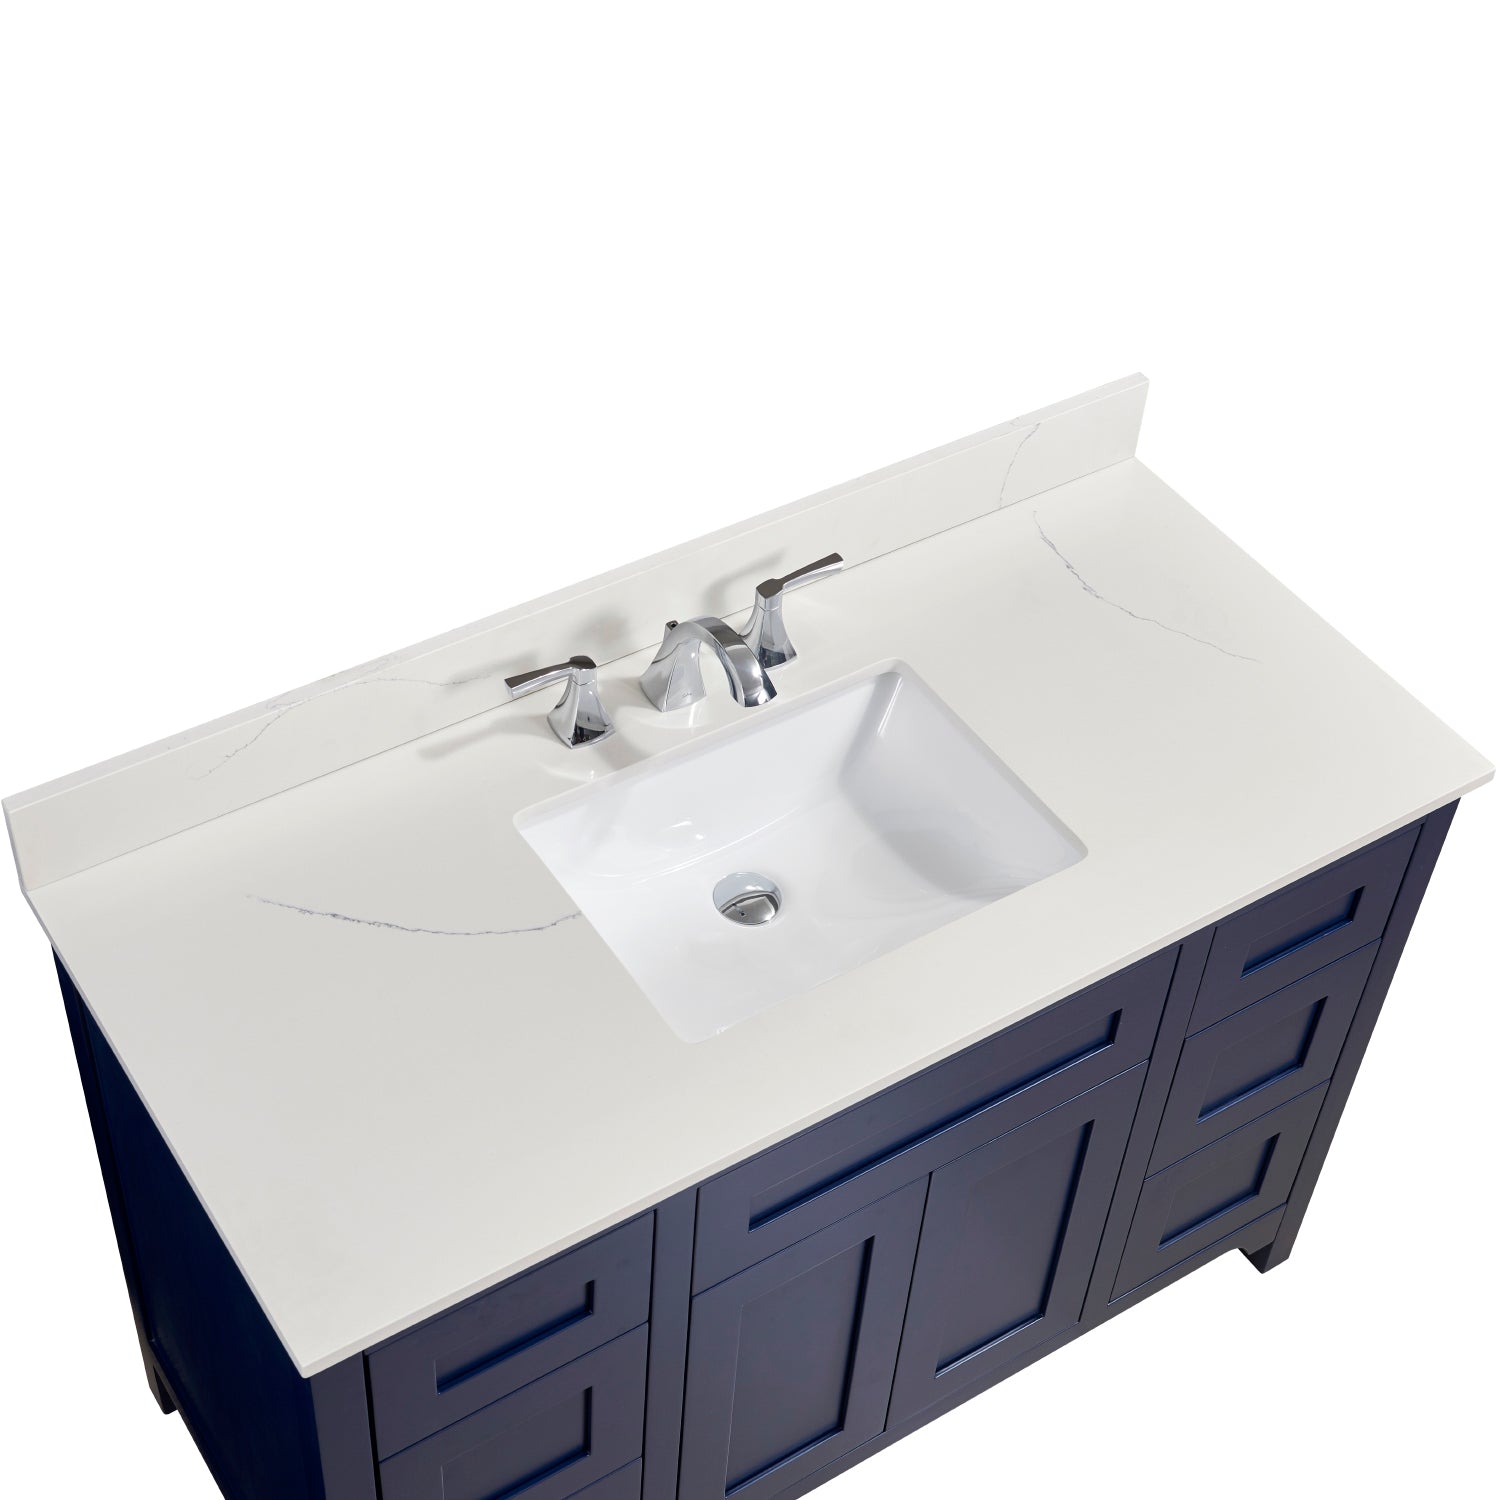 Belluno Single Sink Bathroom Vanity Countertop in Milano White